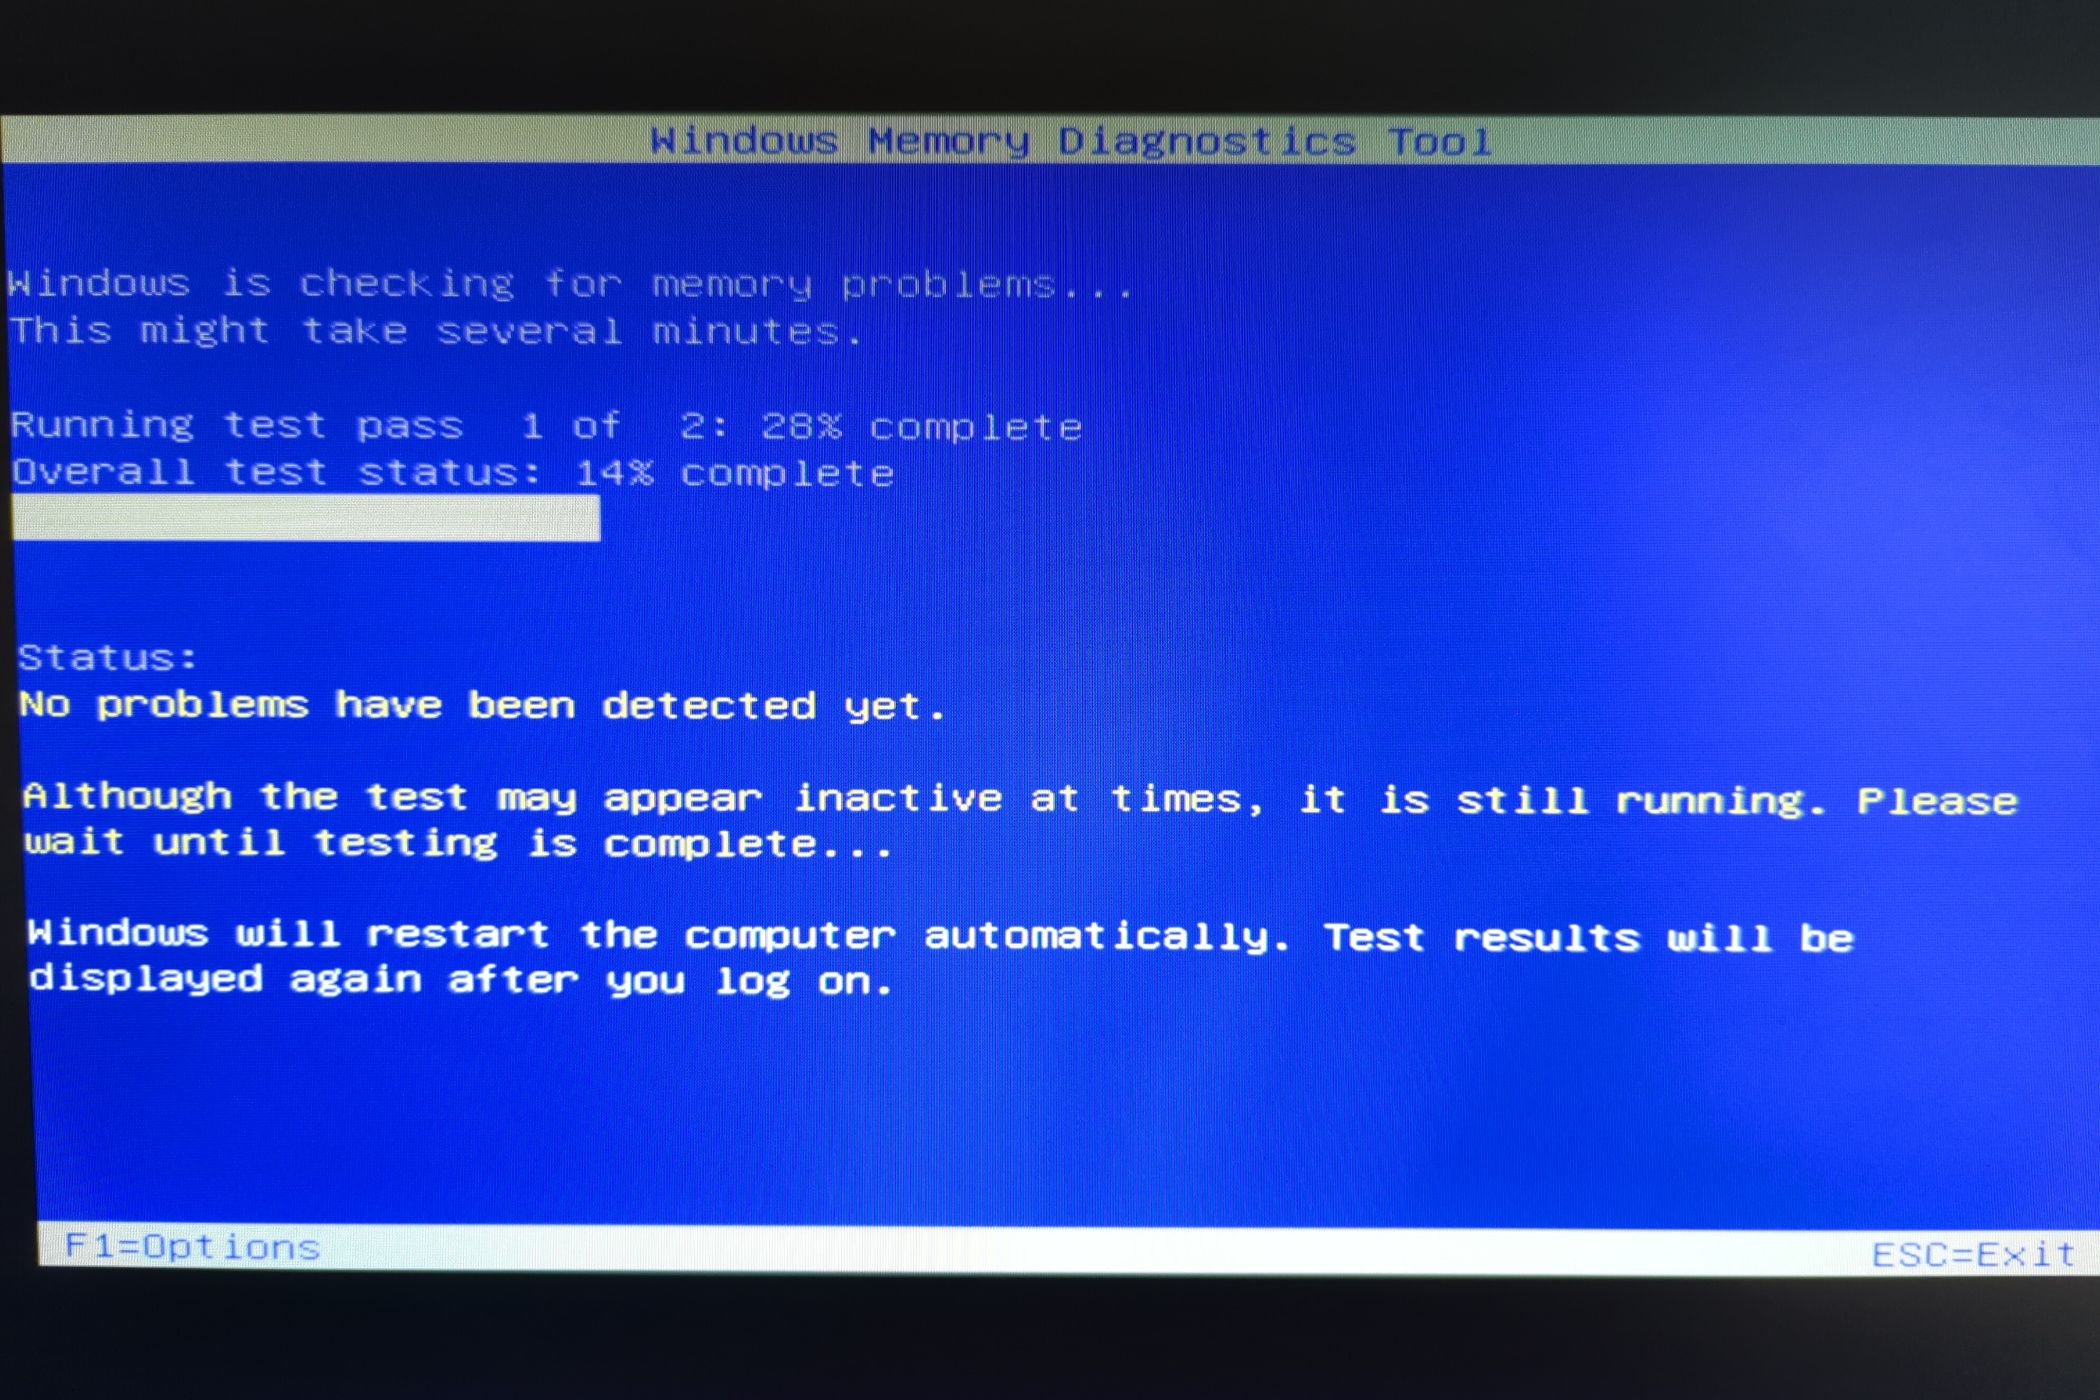 Windows Memory Diagnostics Tool running on a computer monitor.